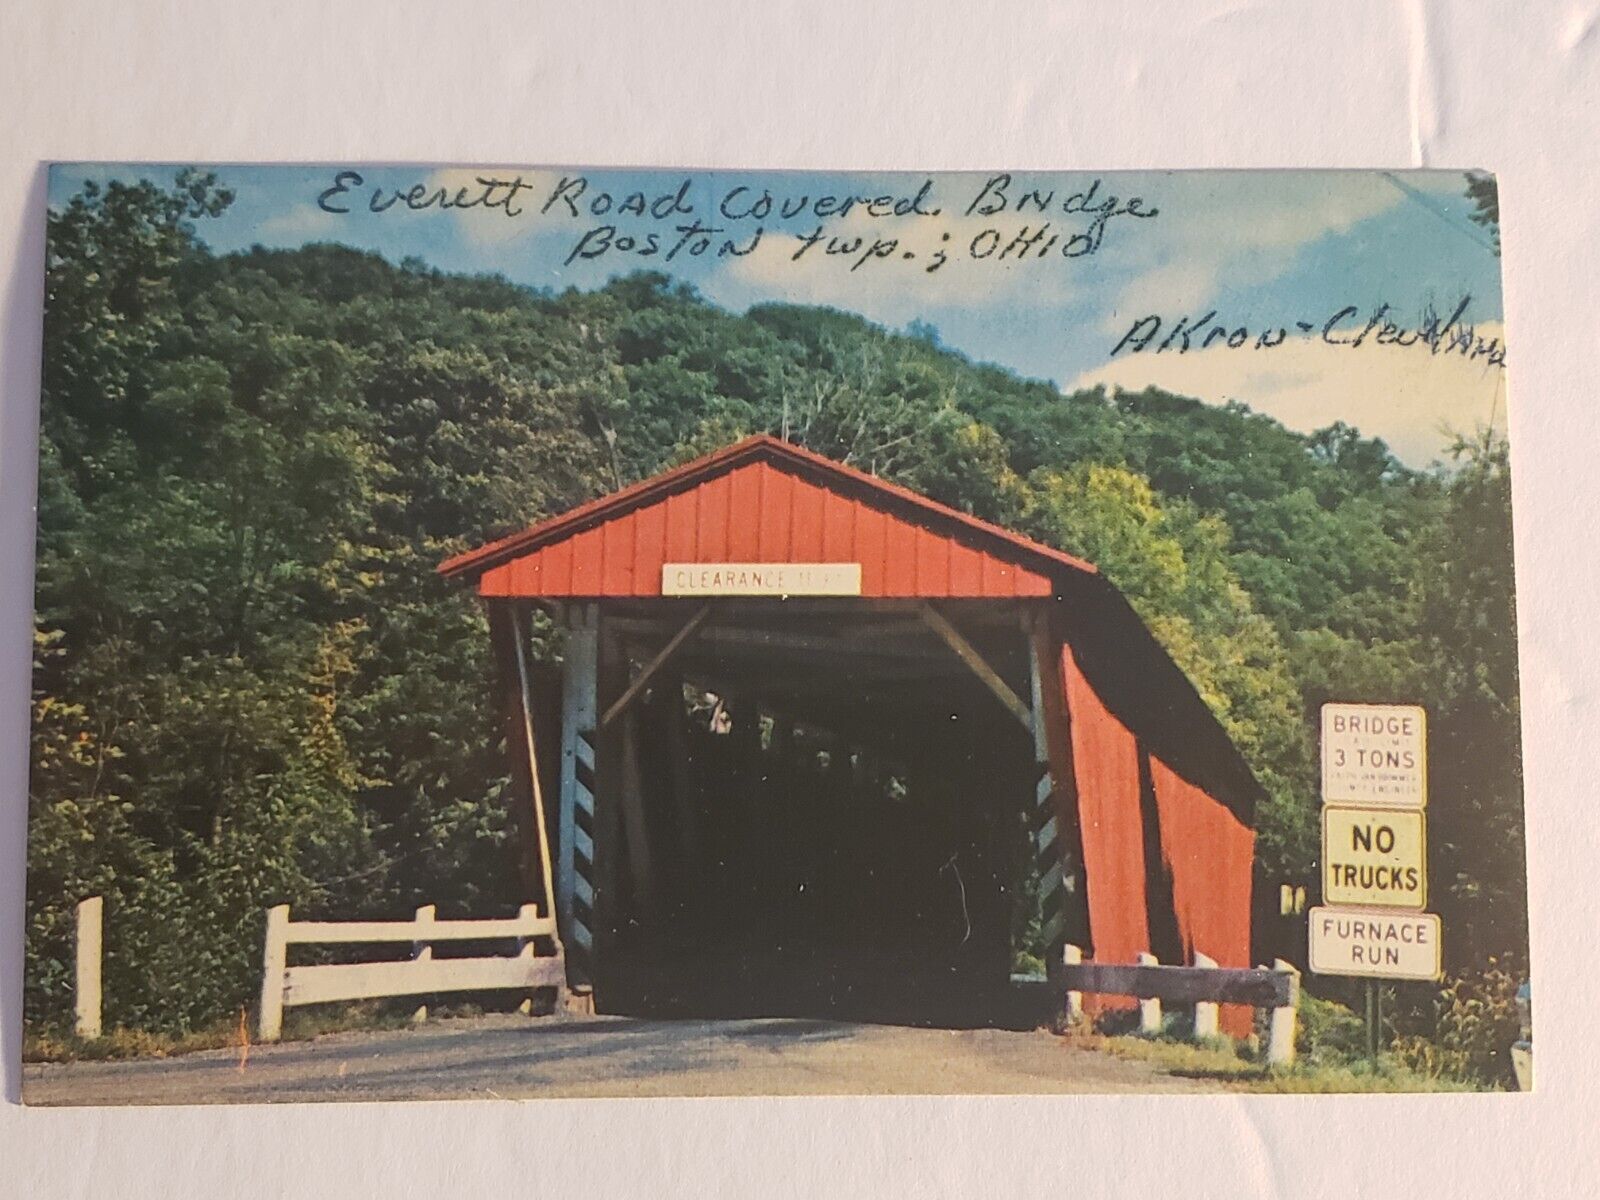  Everett Road Covered Bridge Boston Township Ohio Postcard #103